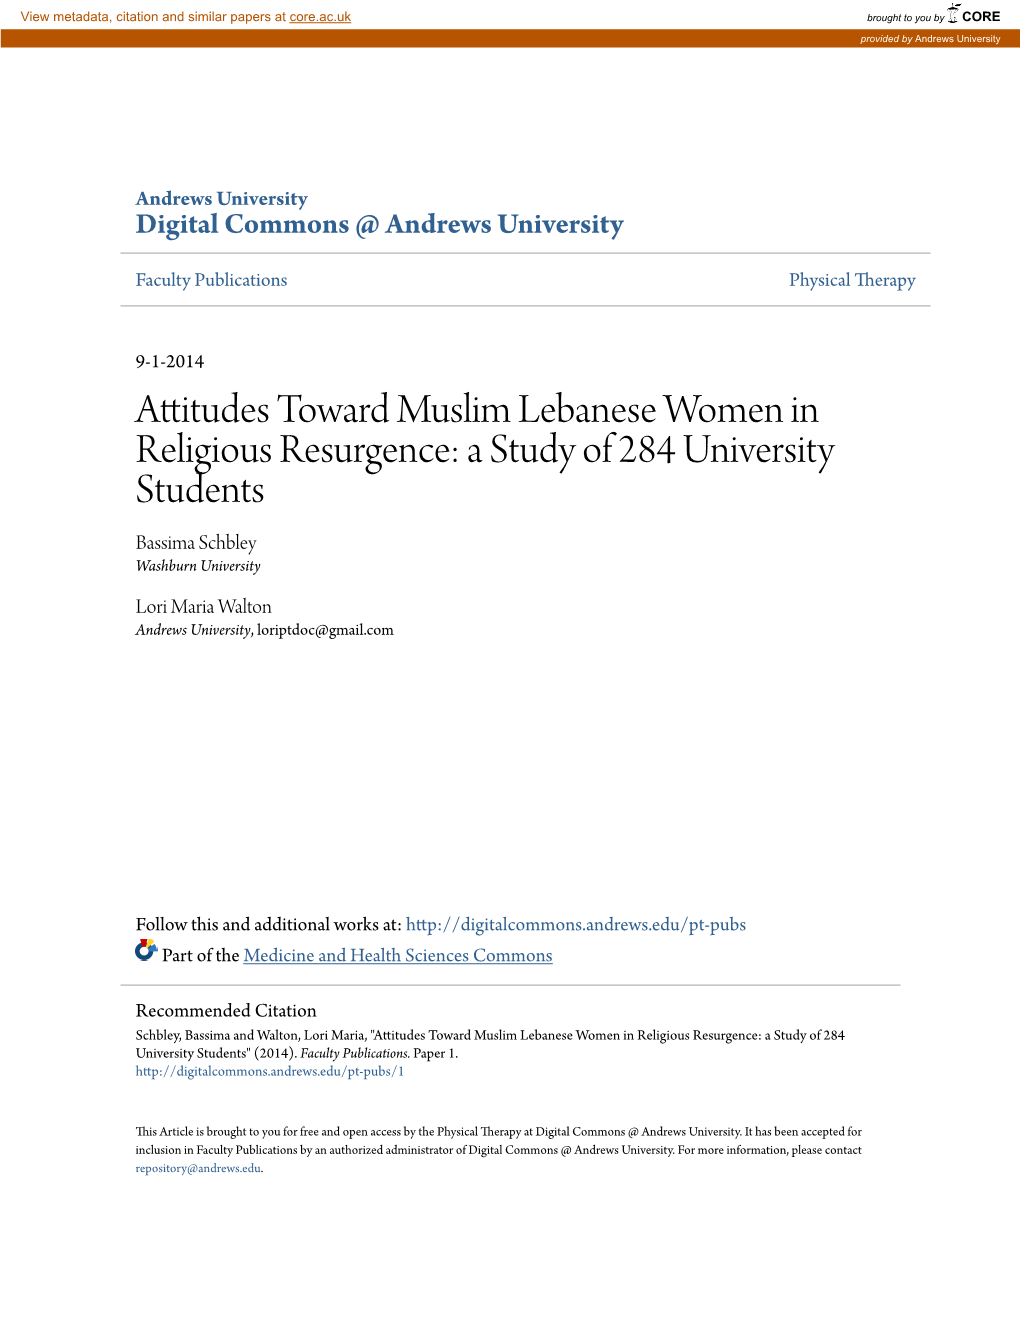 Attitudes Toward Muslim Lebanese Women in Religious Resurgence: a Study of 284 University Students Bassima Schbley Washburn University